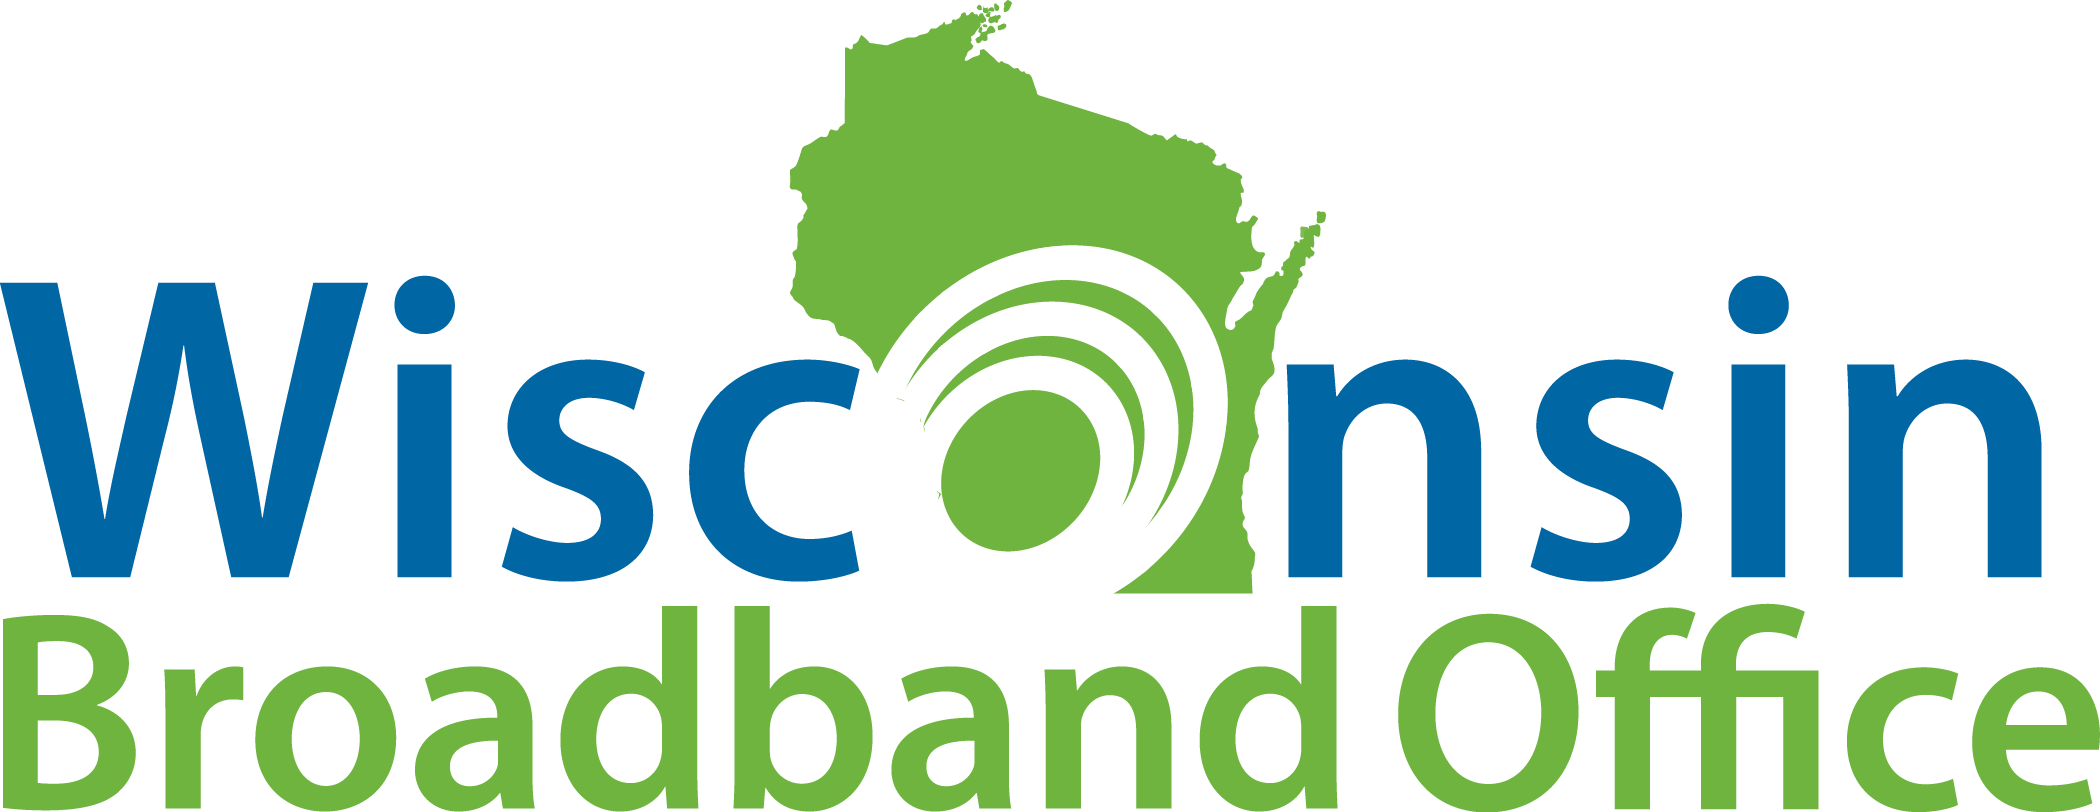 Wisconsin Broadband Office logo